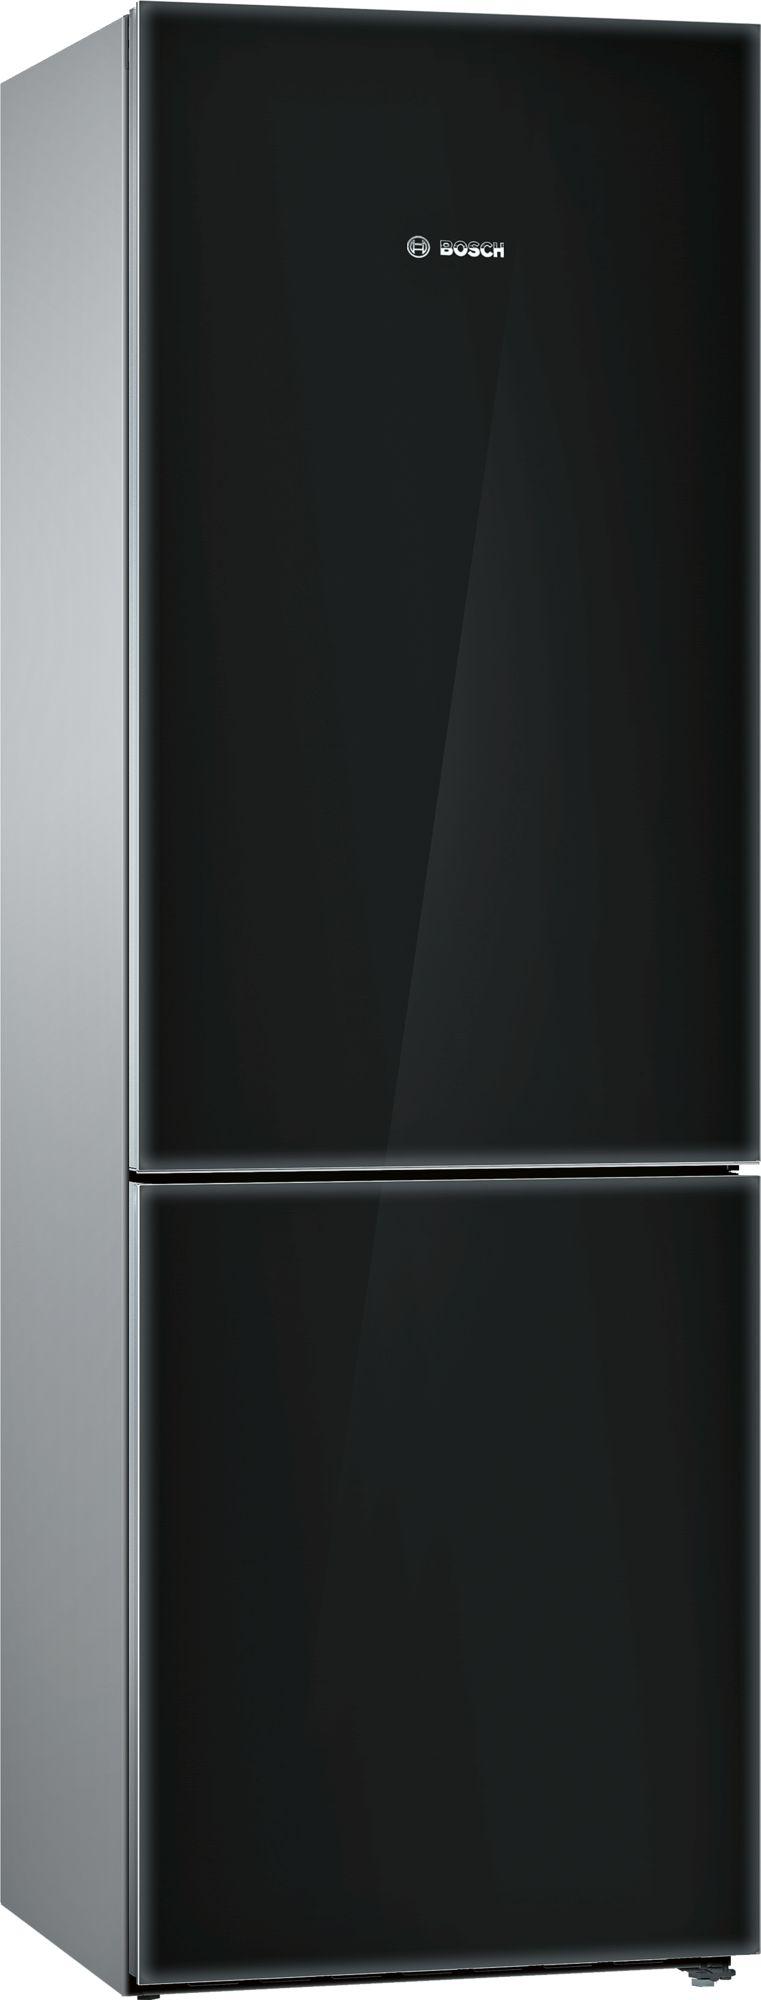 Bosch - 23.5 Inch 10 cu. ft Bottom Mount Refrigerator in Black - B10CB80NVB